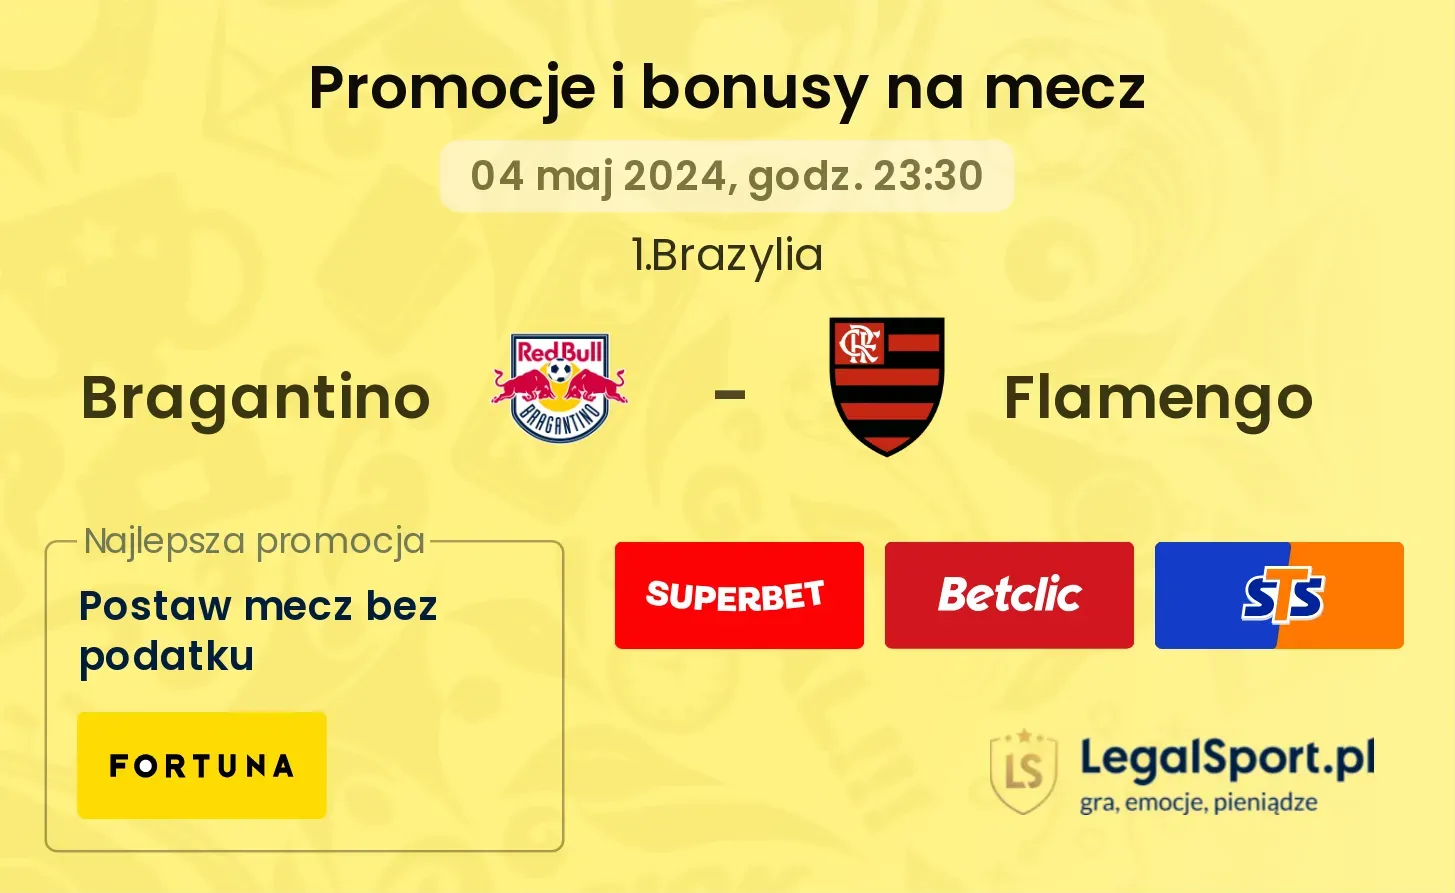 Bragantino - Flamengo promocje bonusy na mecz